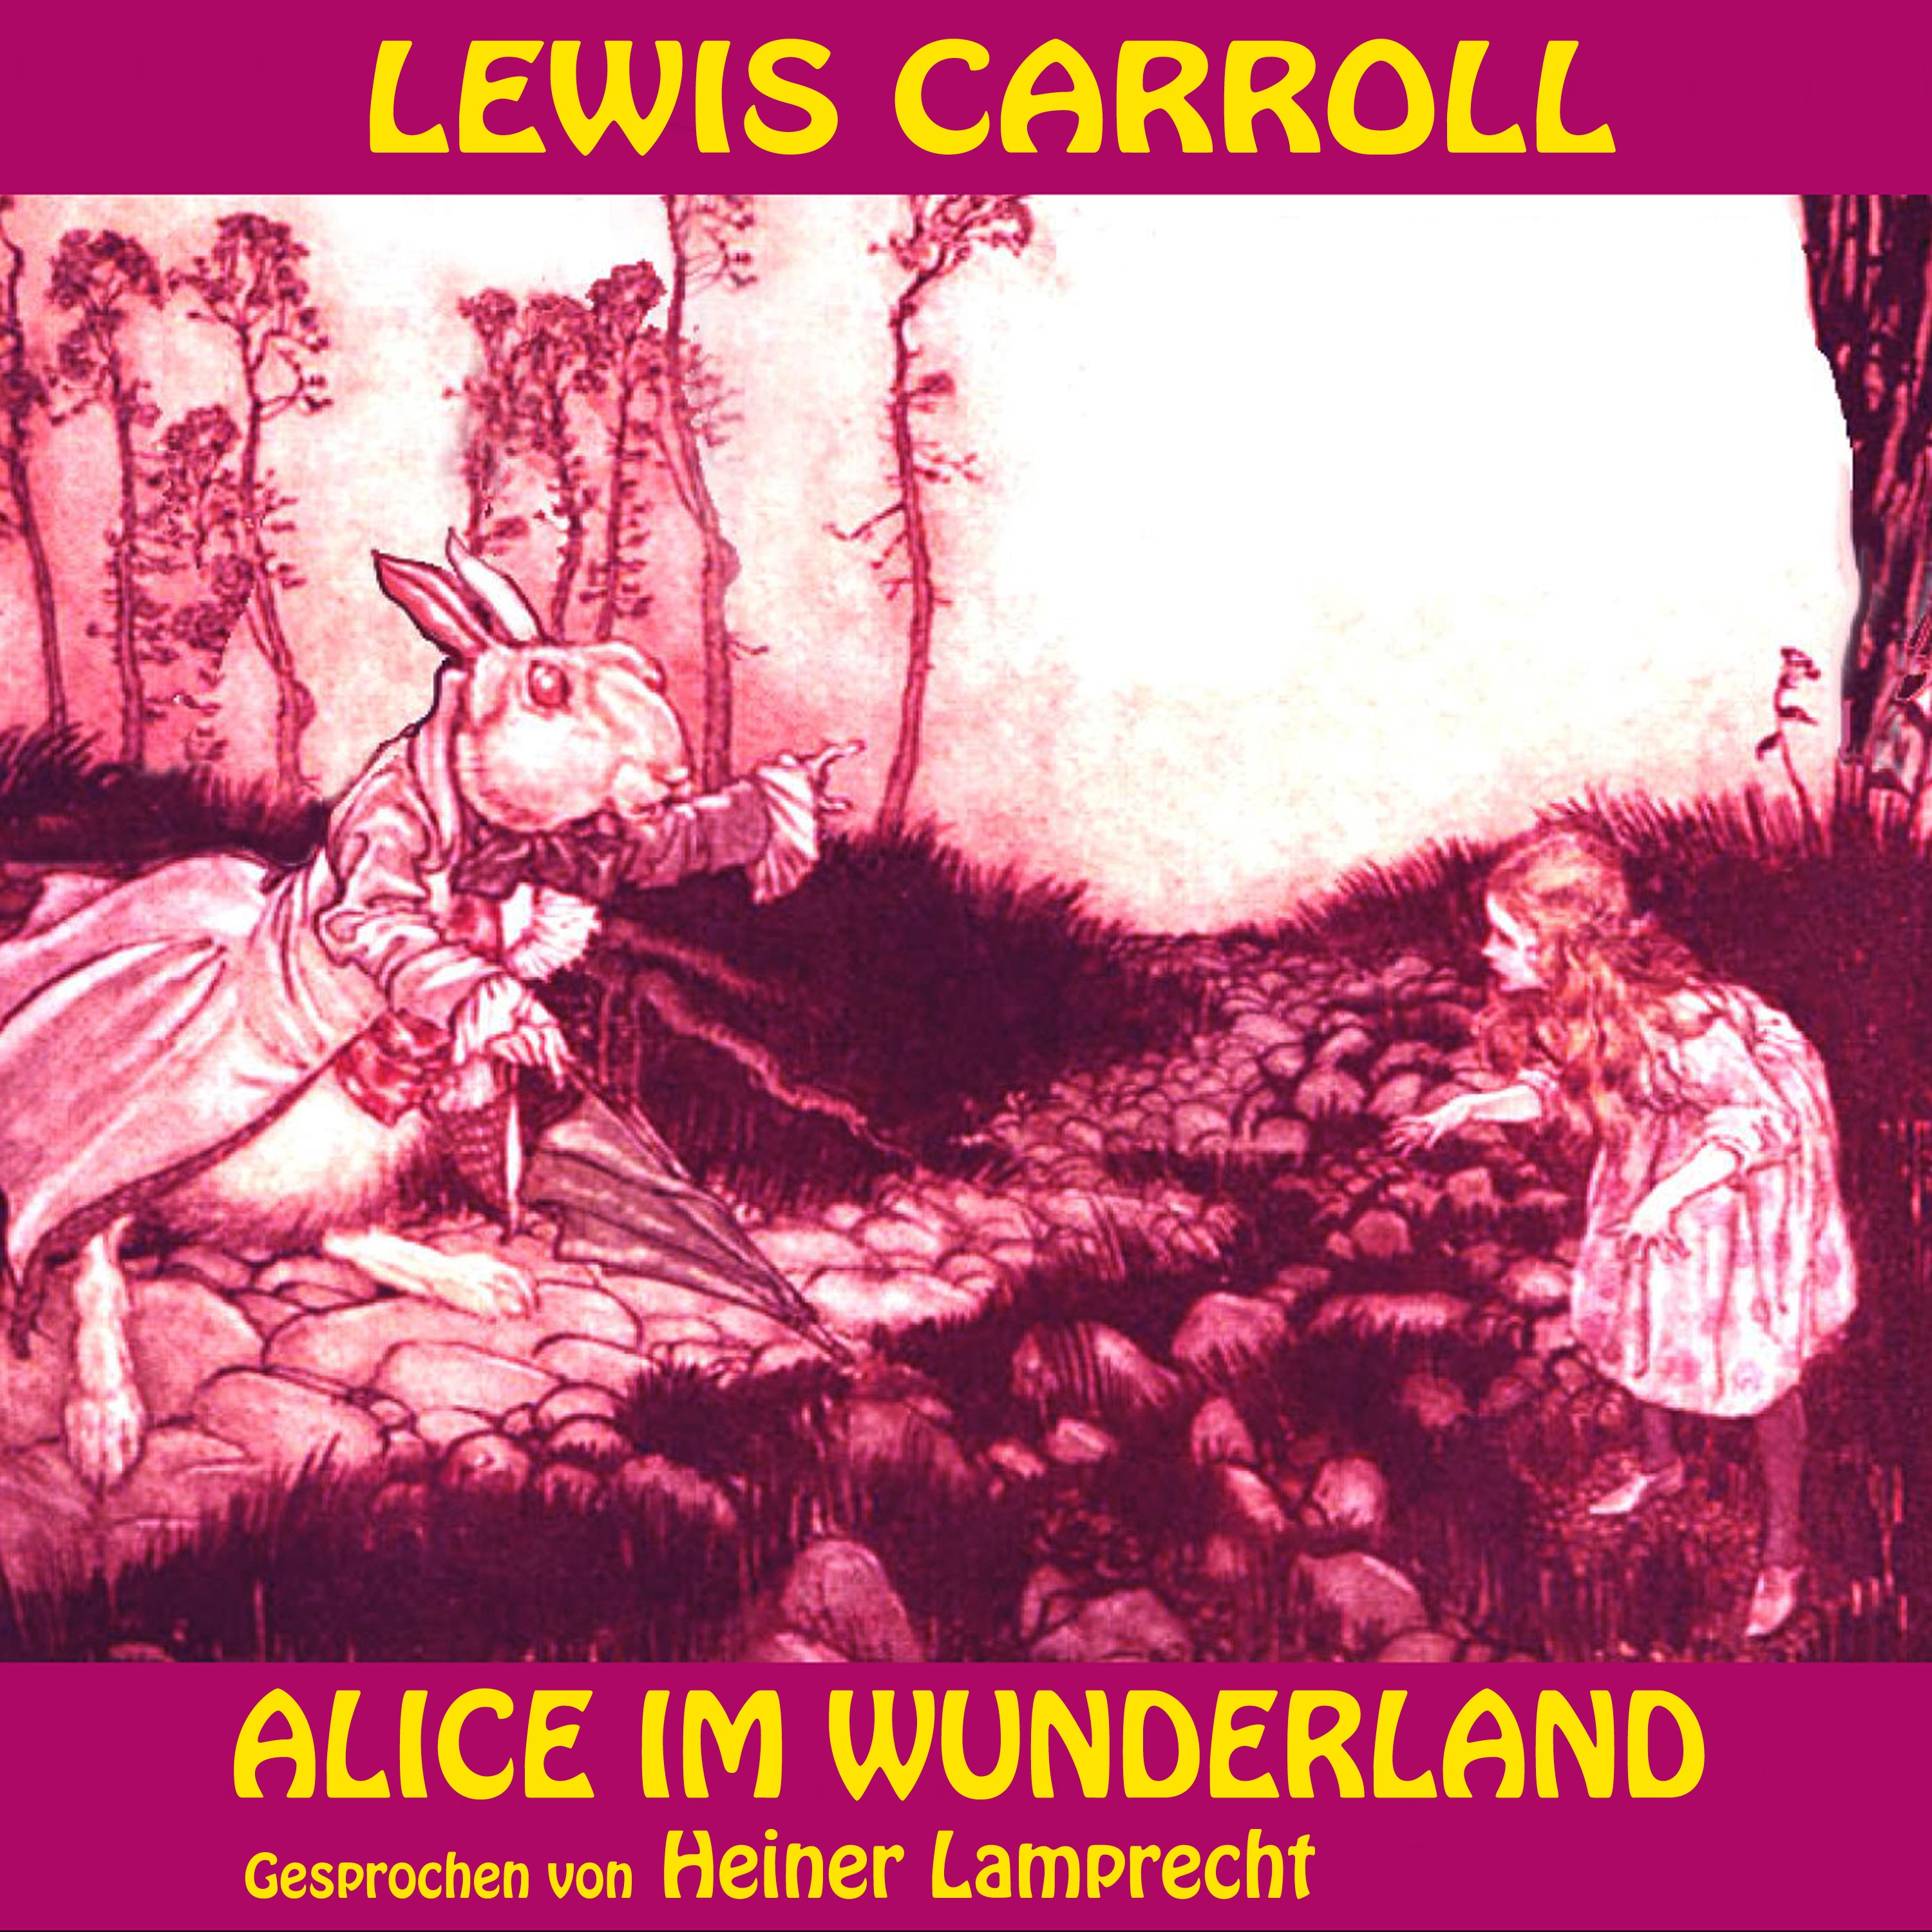 Kapitel 12: Alice im Wunderland (Teil 10)